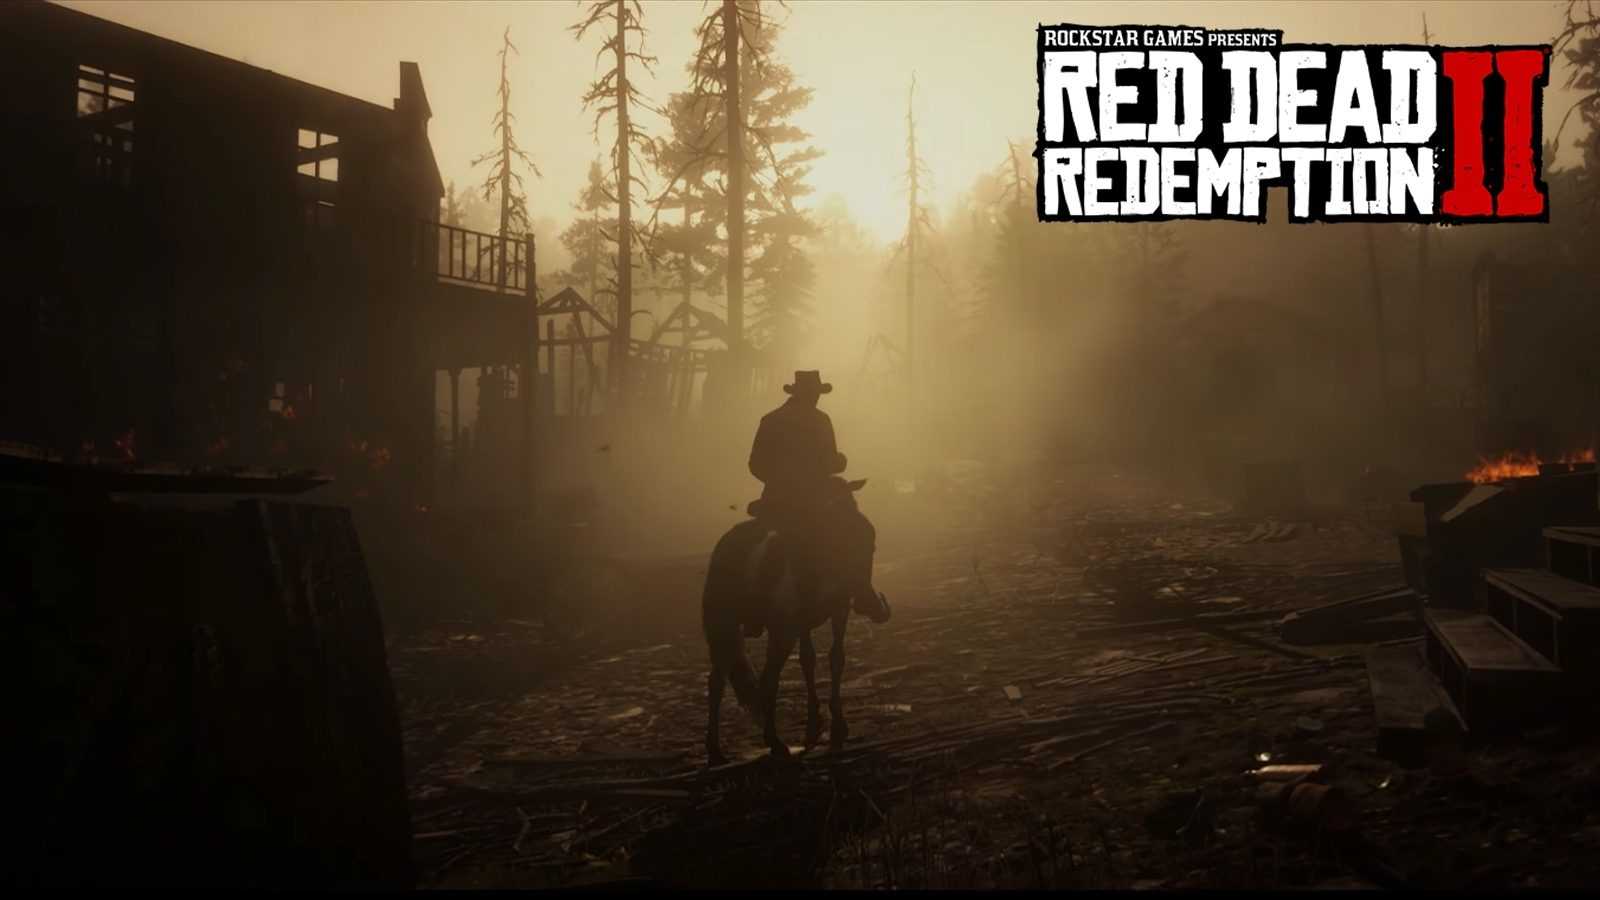 Red dead redemption 2: все концовки и судьбы персонажей